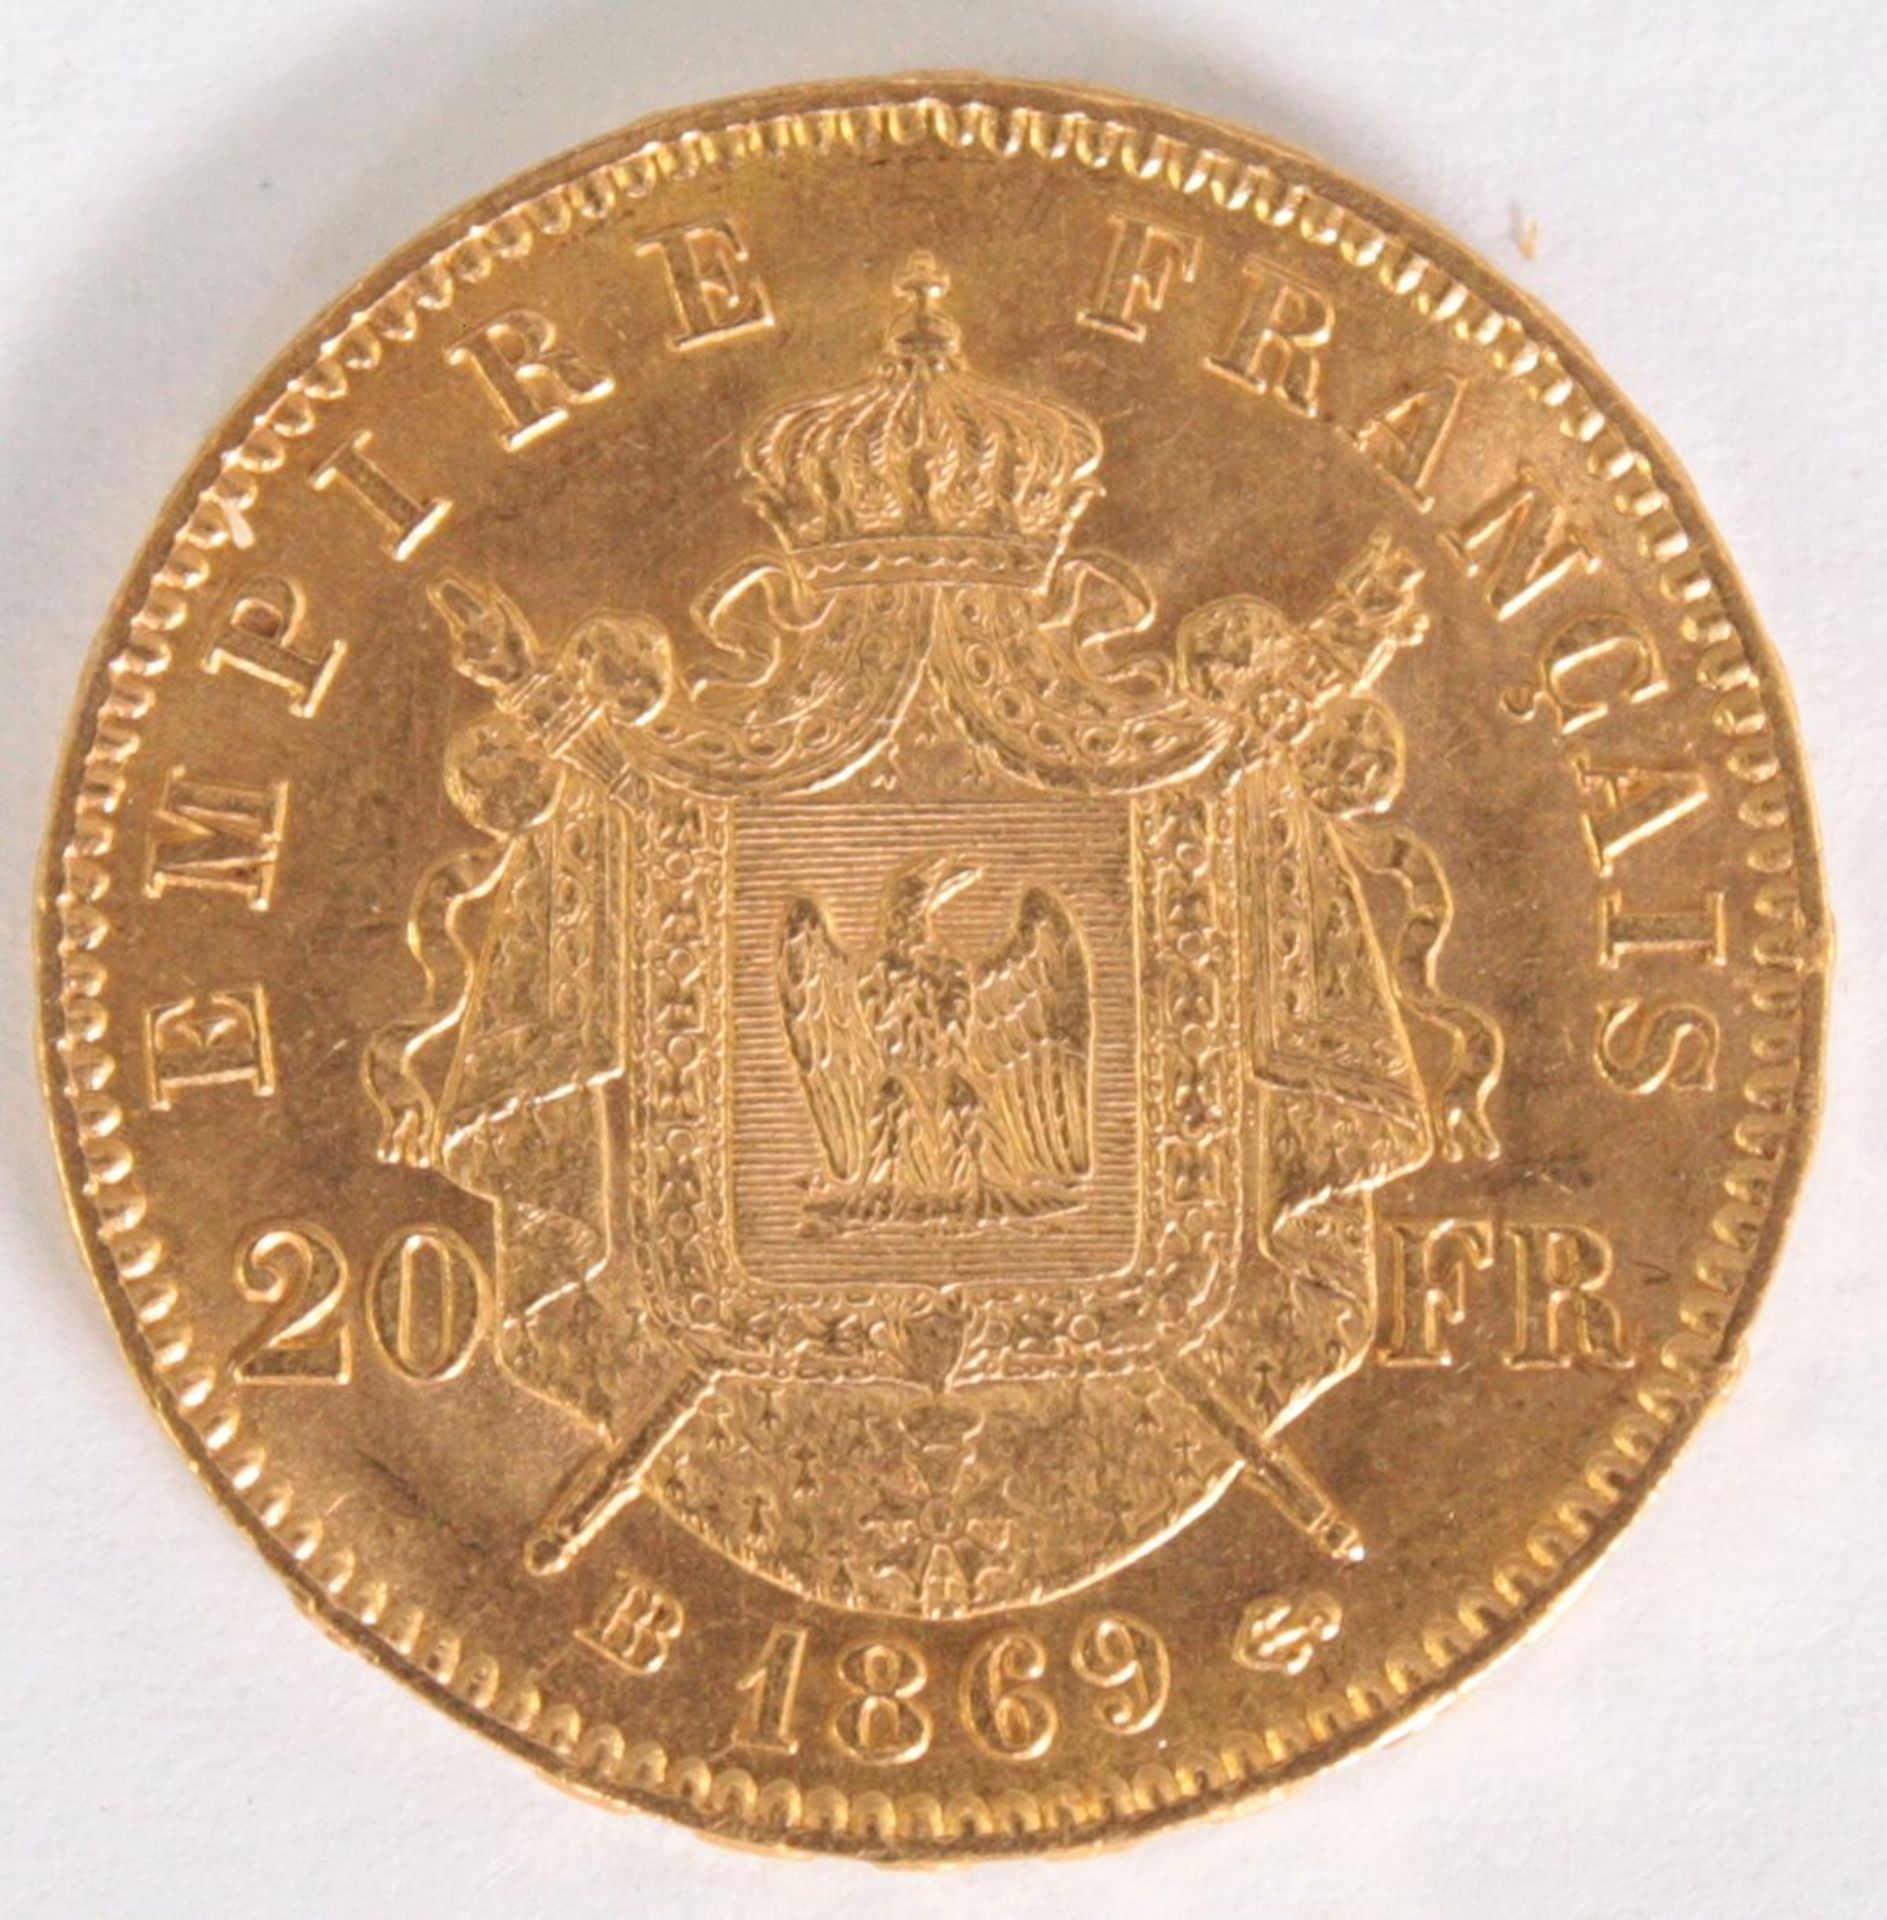 Frankreich, 20 Francs 1869, Napoleon III - Image 2 of 2